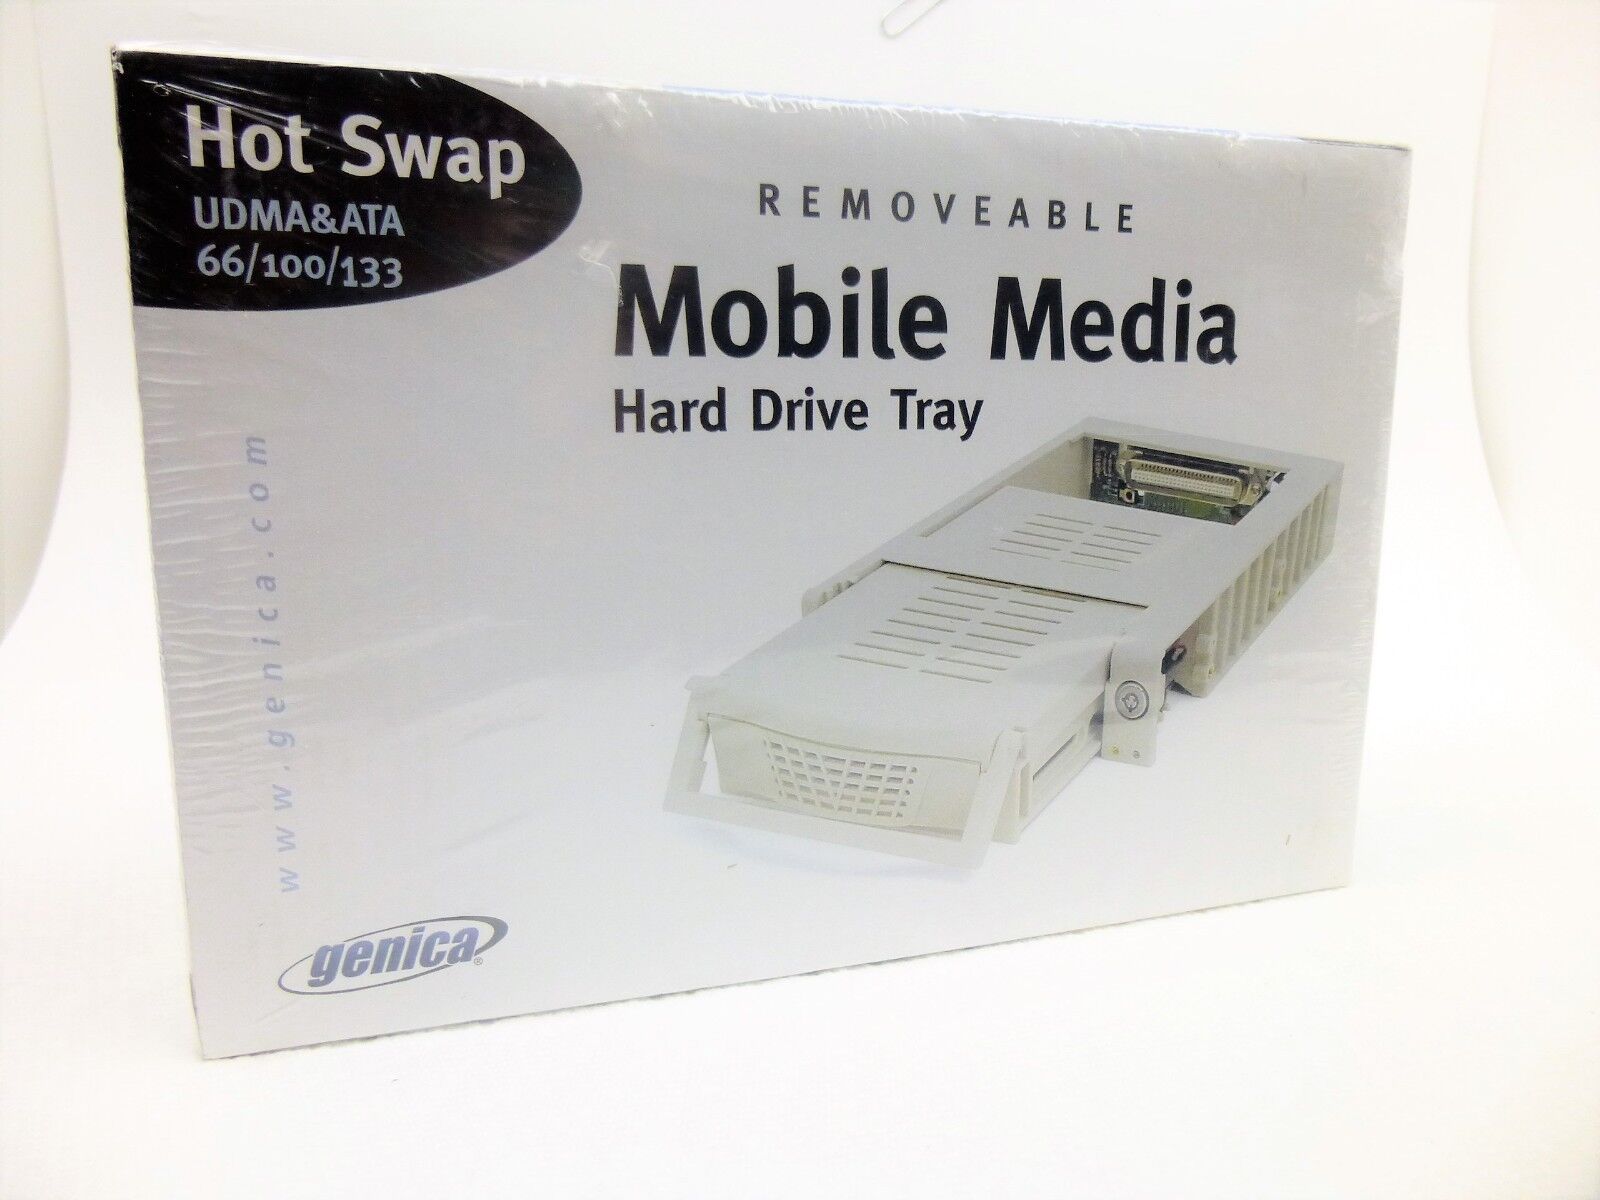 Hot Swap Removable Mobile Media Hard Drive Tray UDMA&ATA 66/100/133 NEW - SEALED